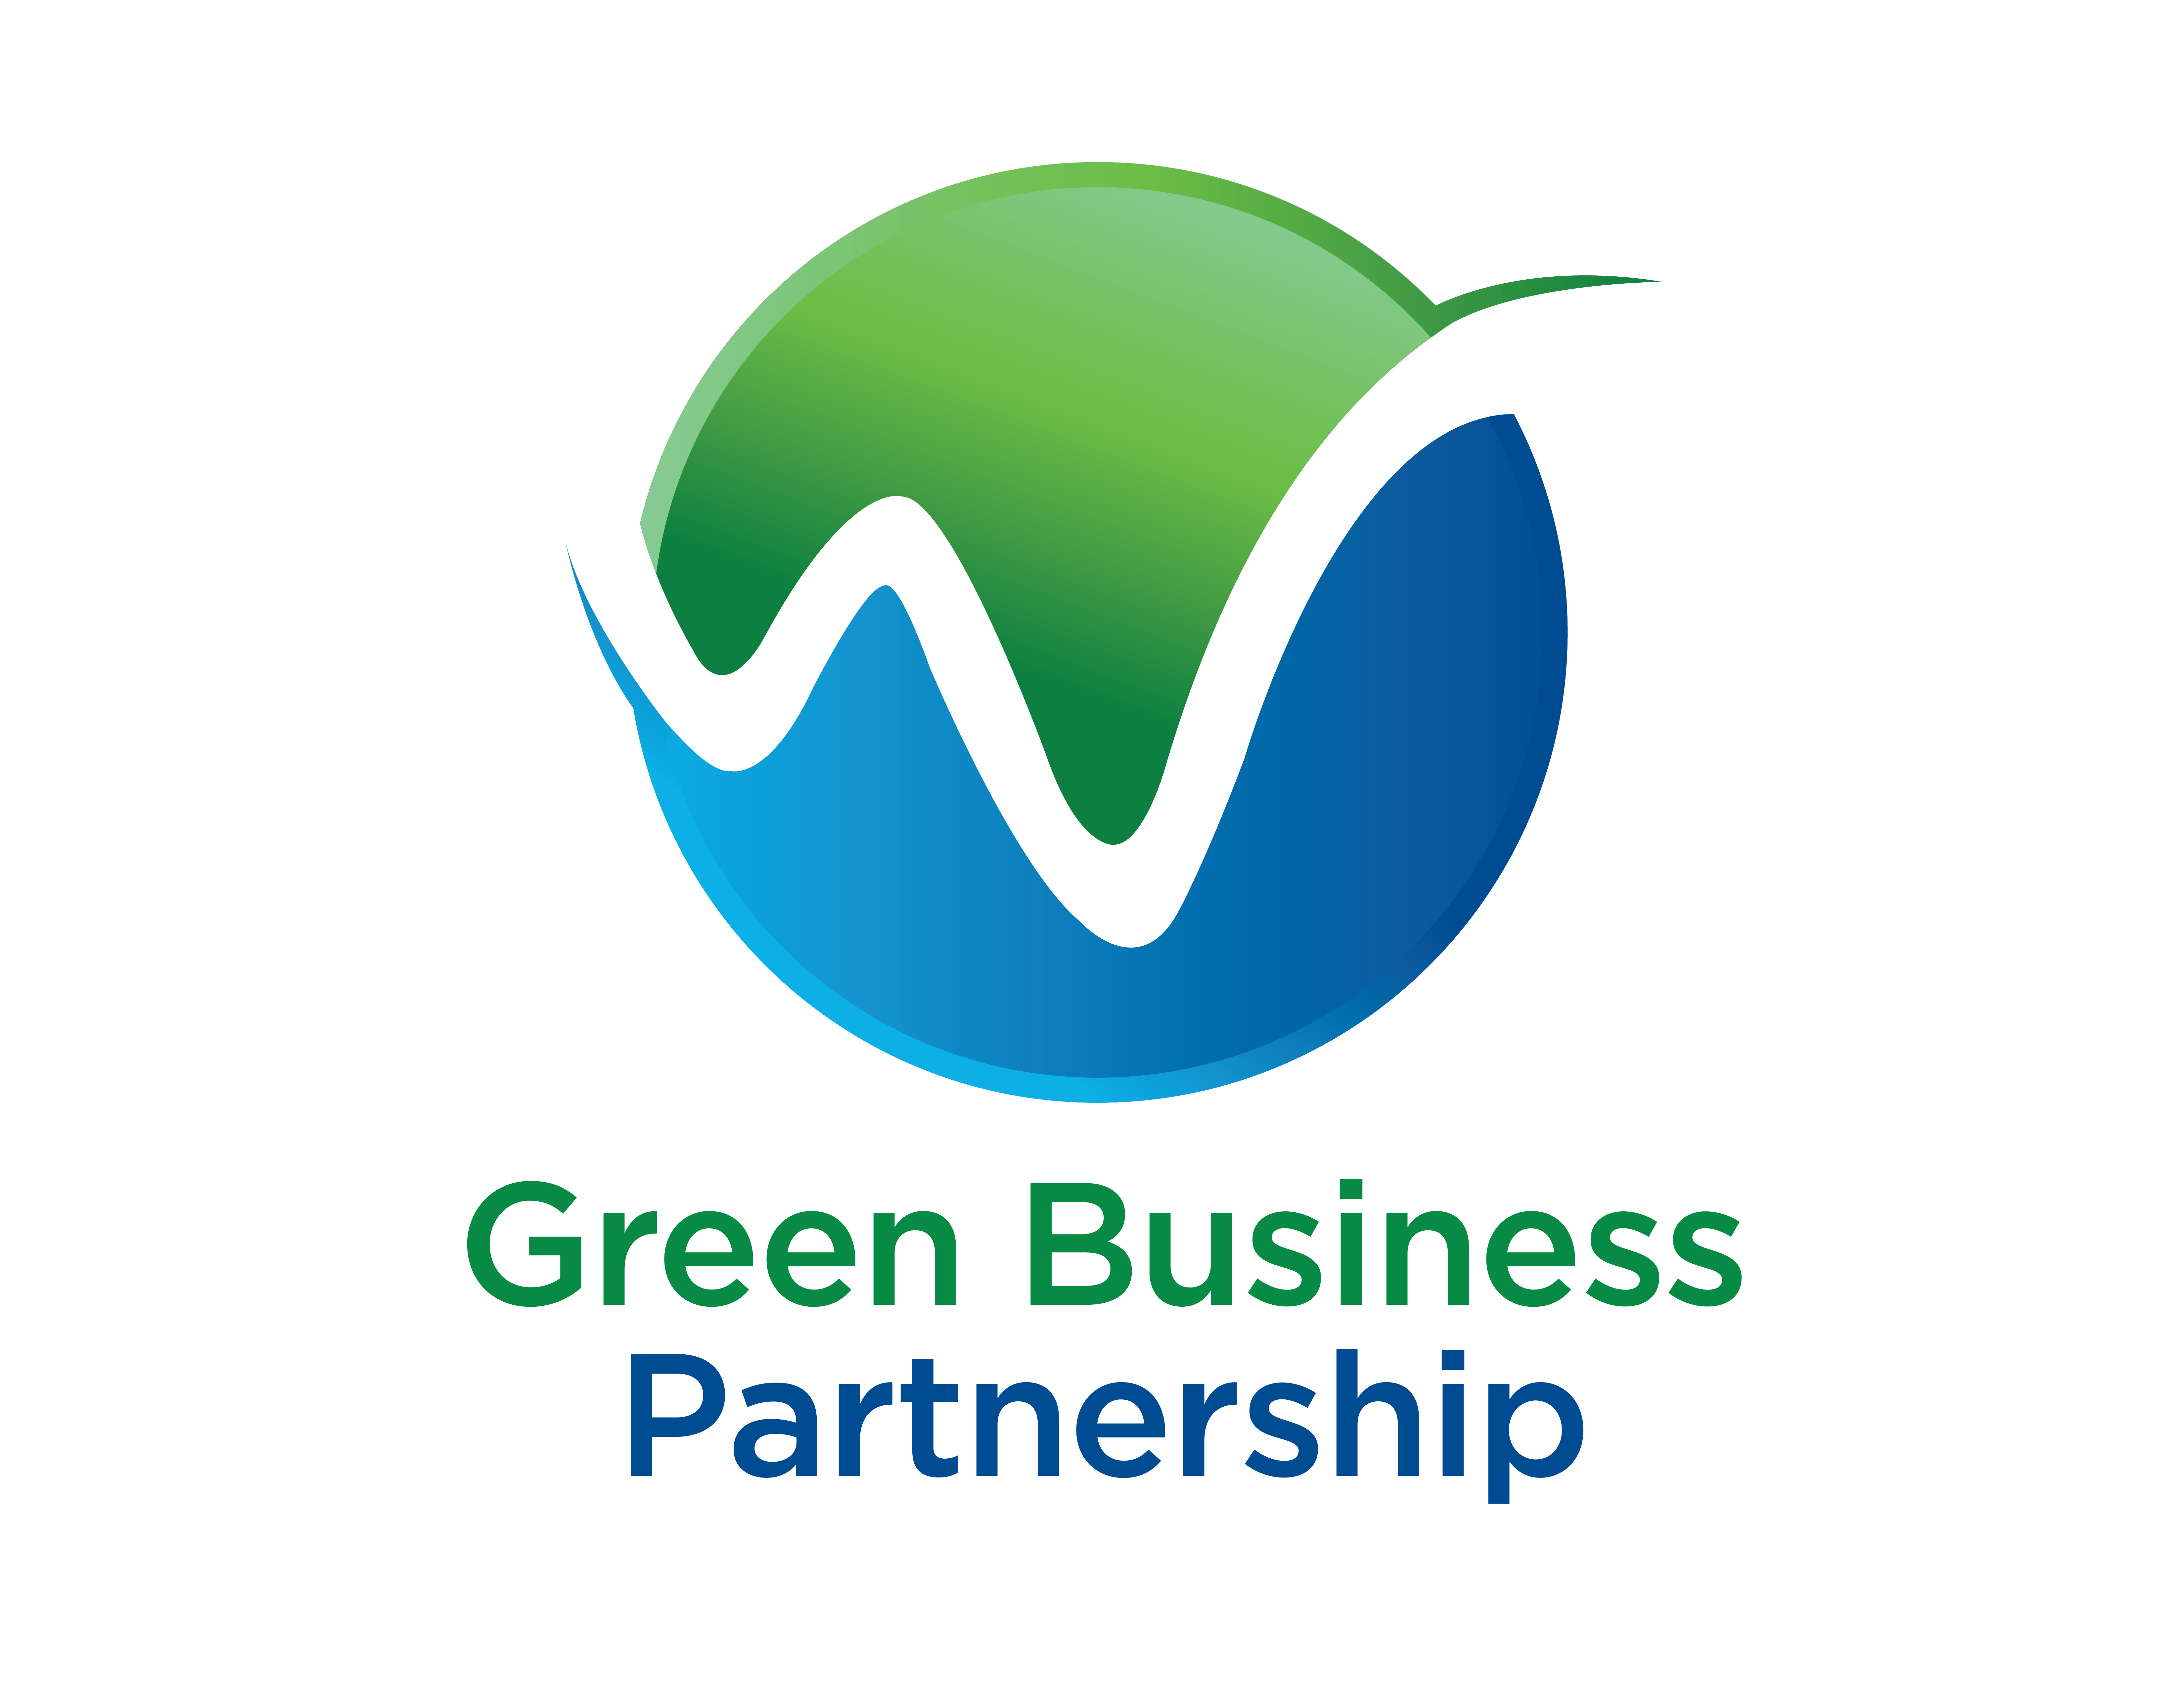 Green Business Partnership